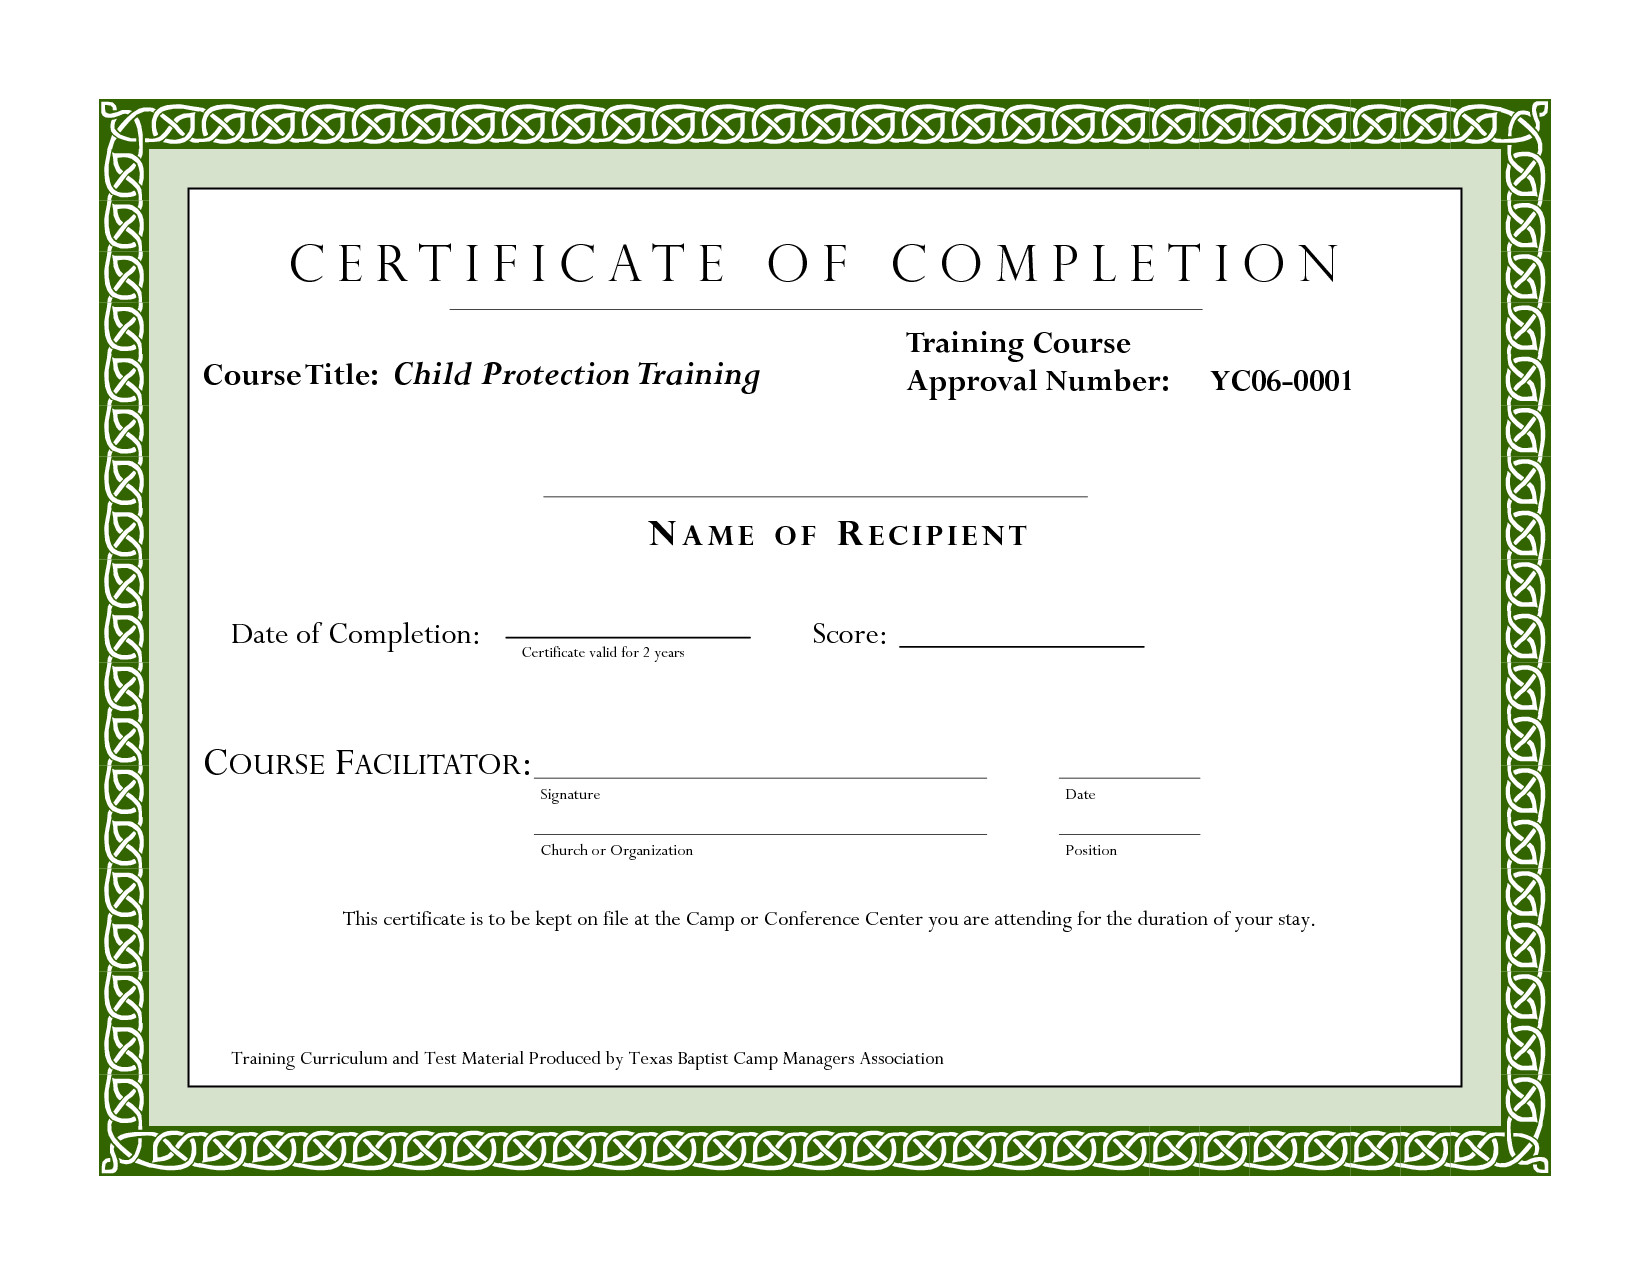 Course pletion Certificate Template